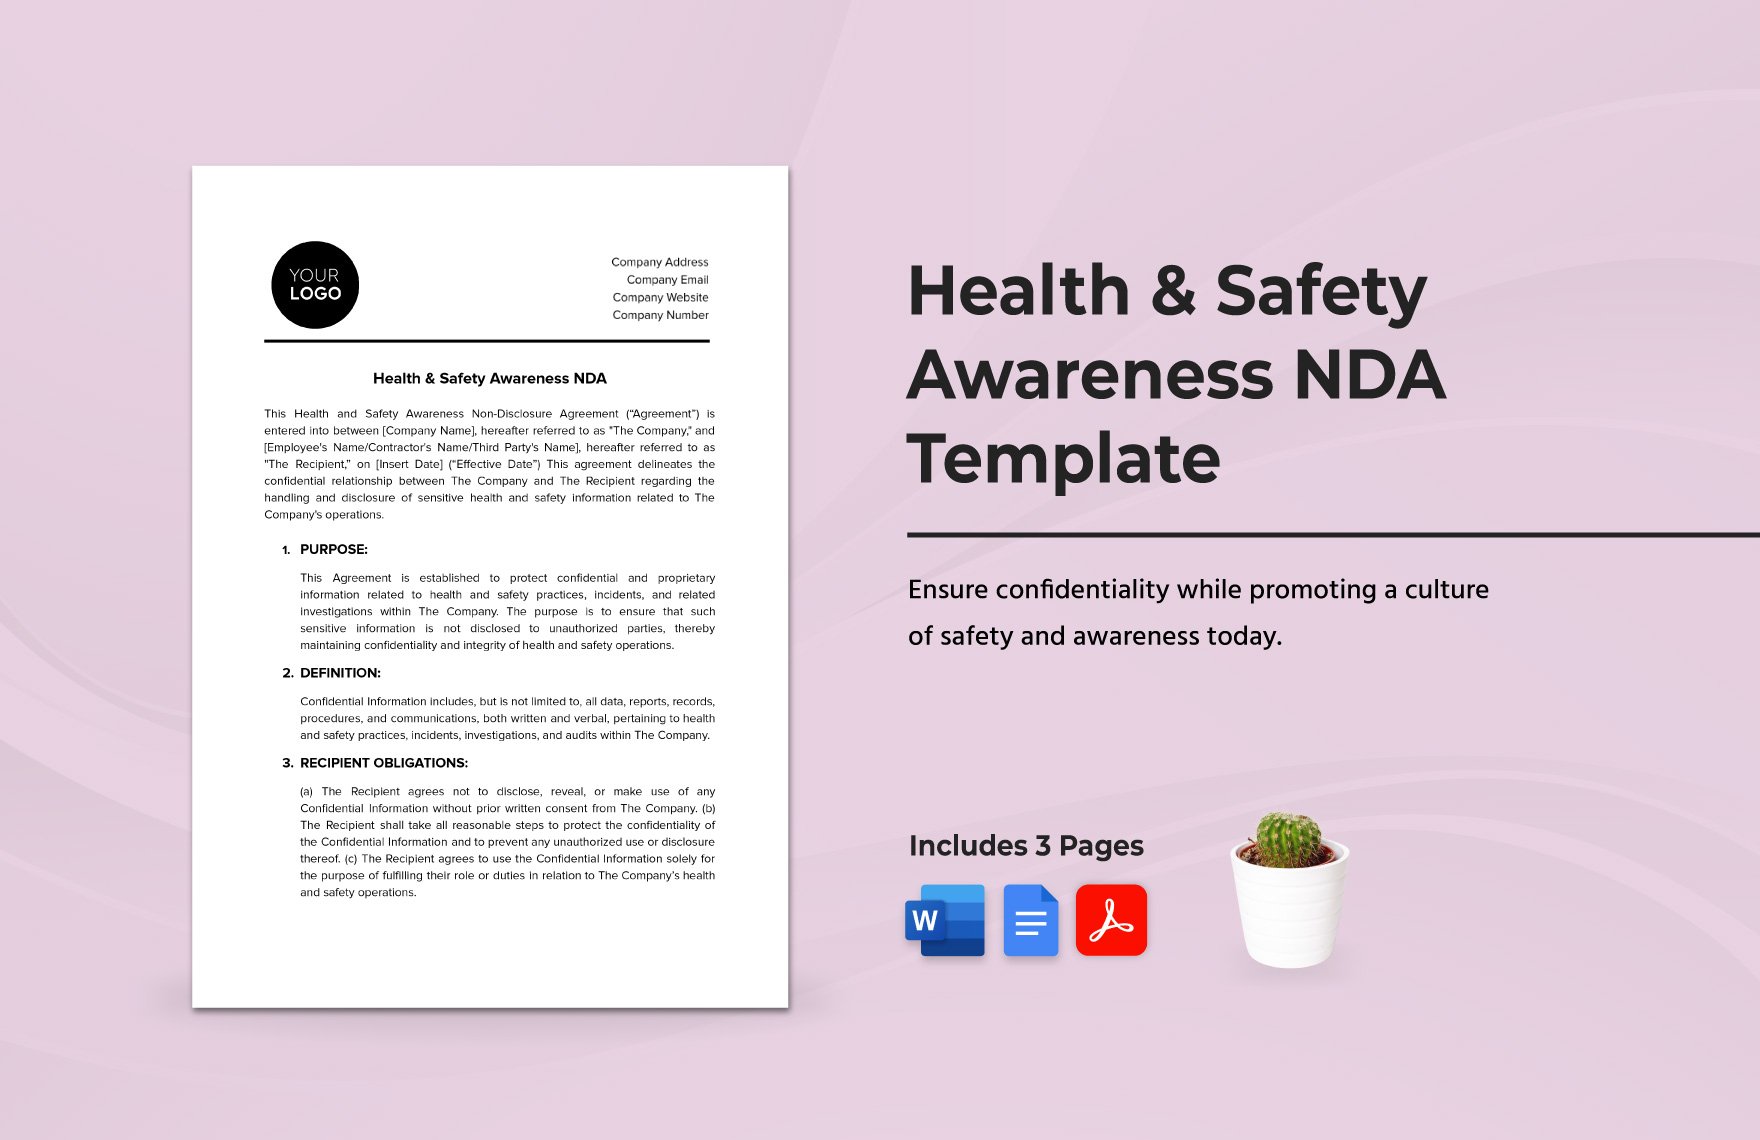 Health & Safety Awareness NDA Template